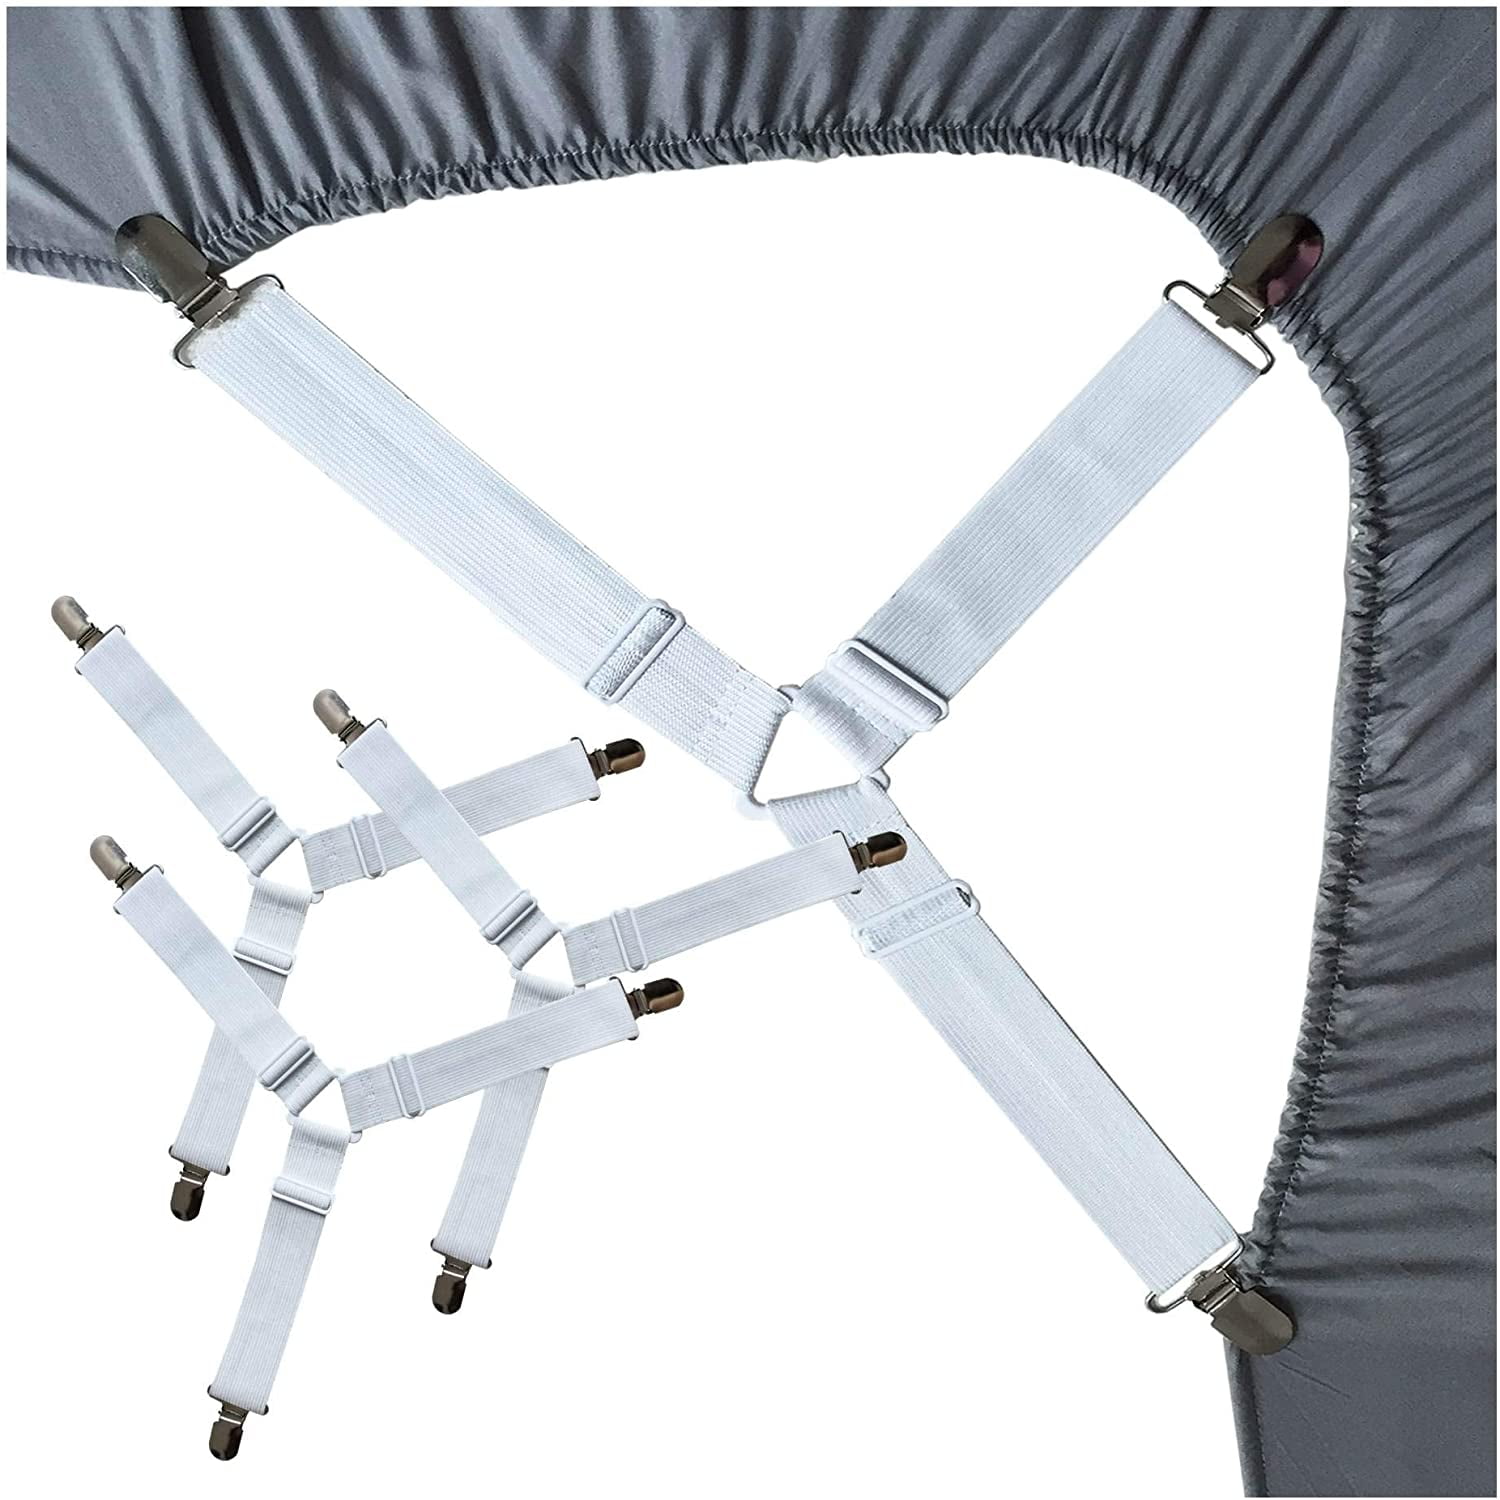 4xAdjustable For Bed Sheet Straps Fastener Holder Suspender Grippers Clips White 